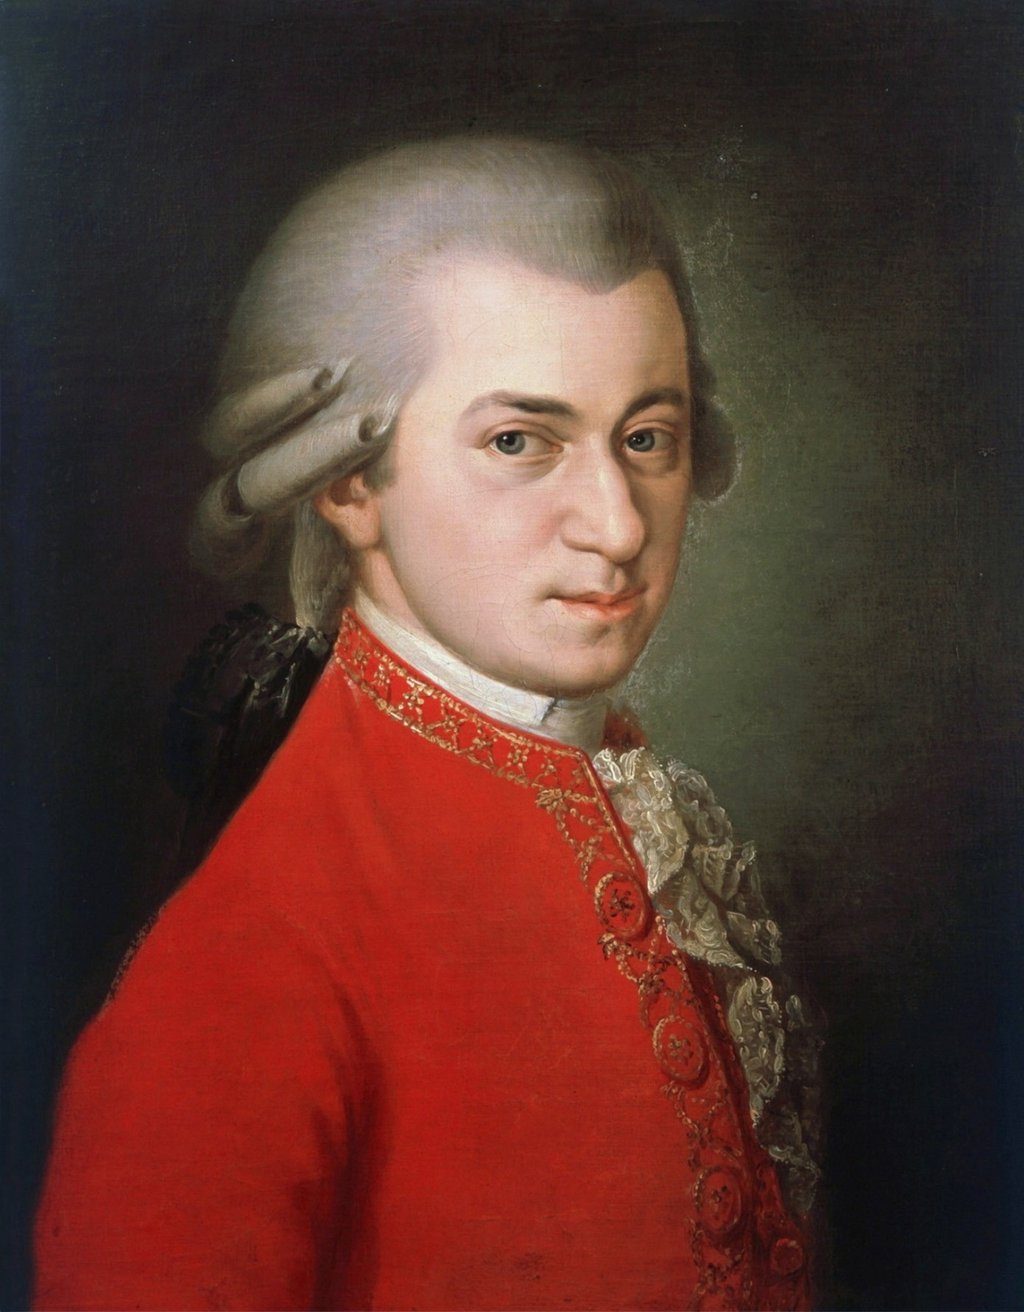 Un día para recordar a Mozart